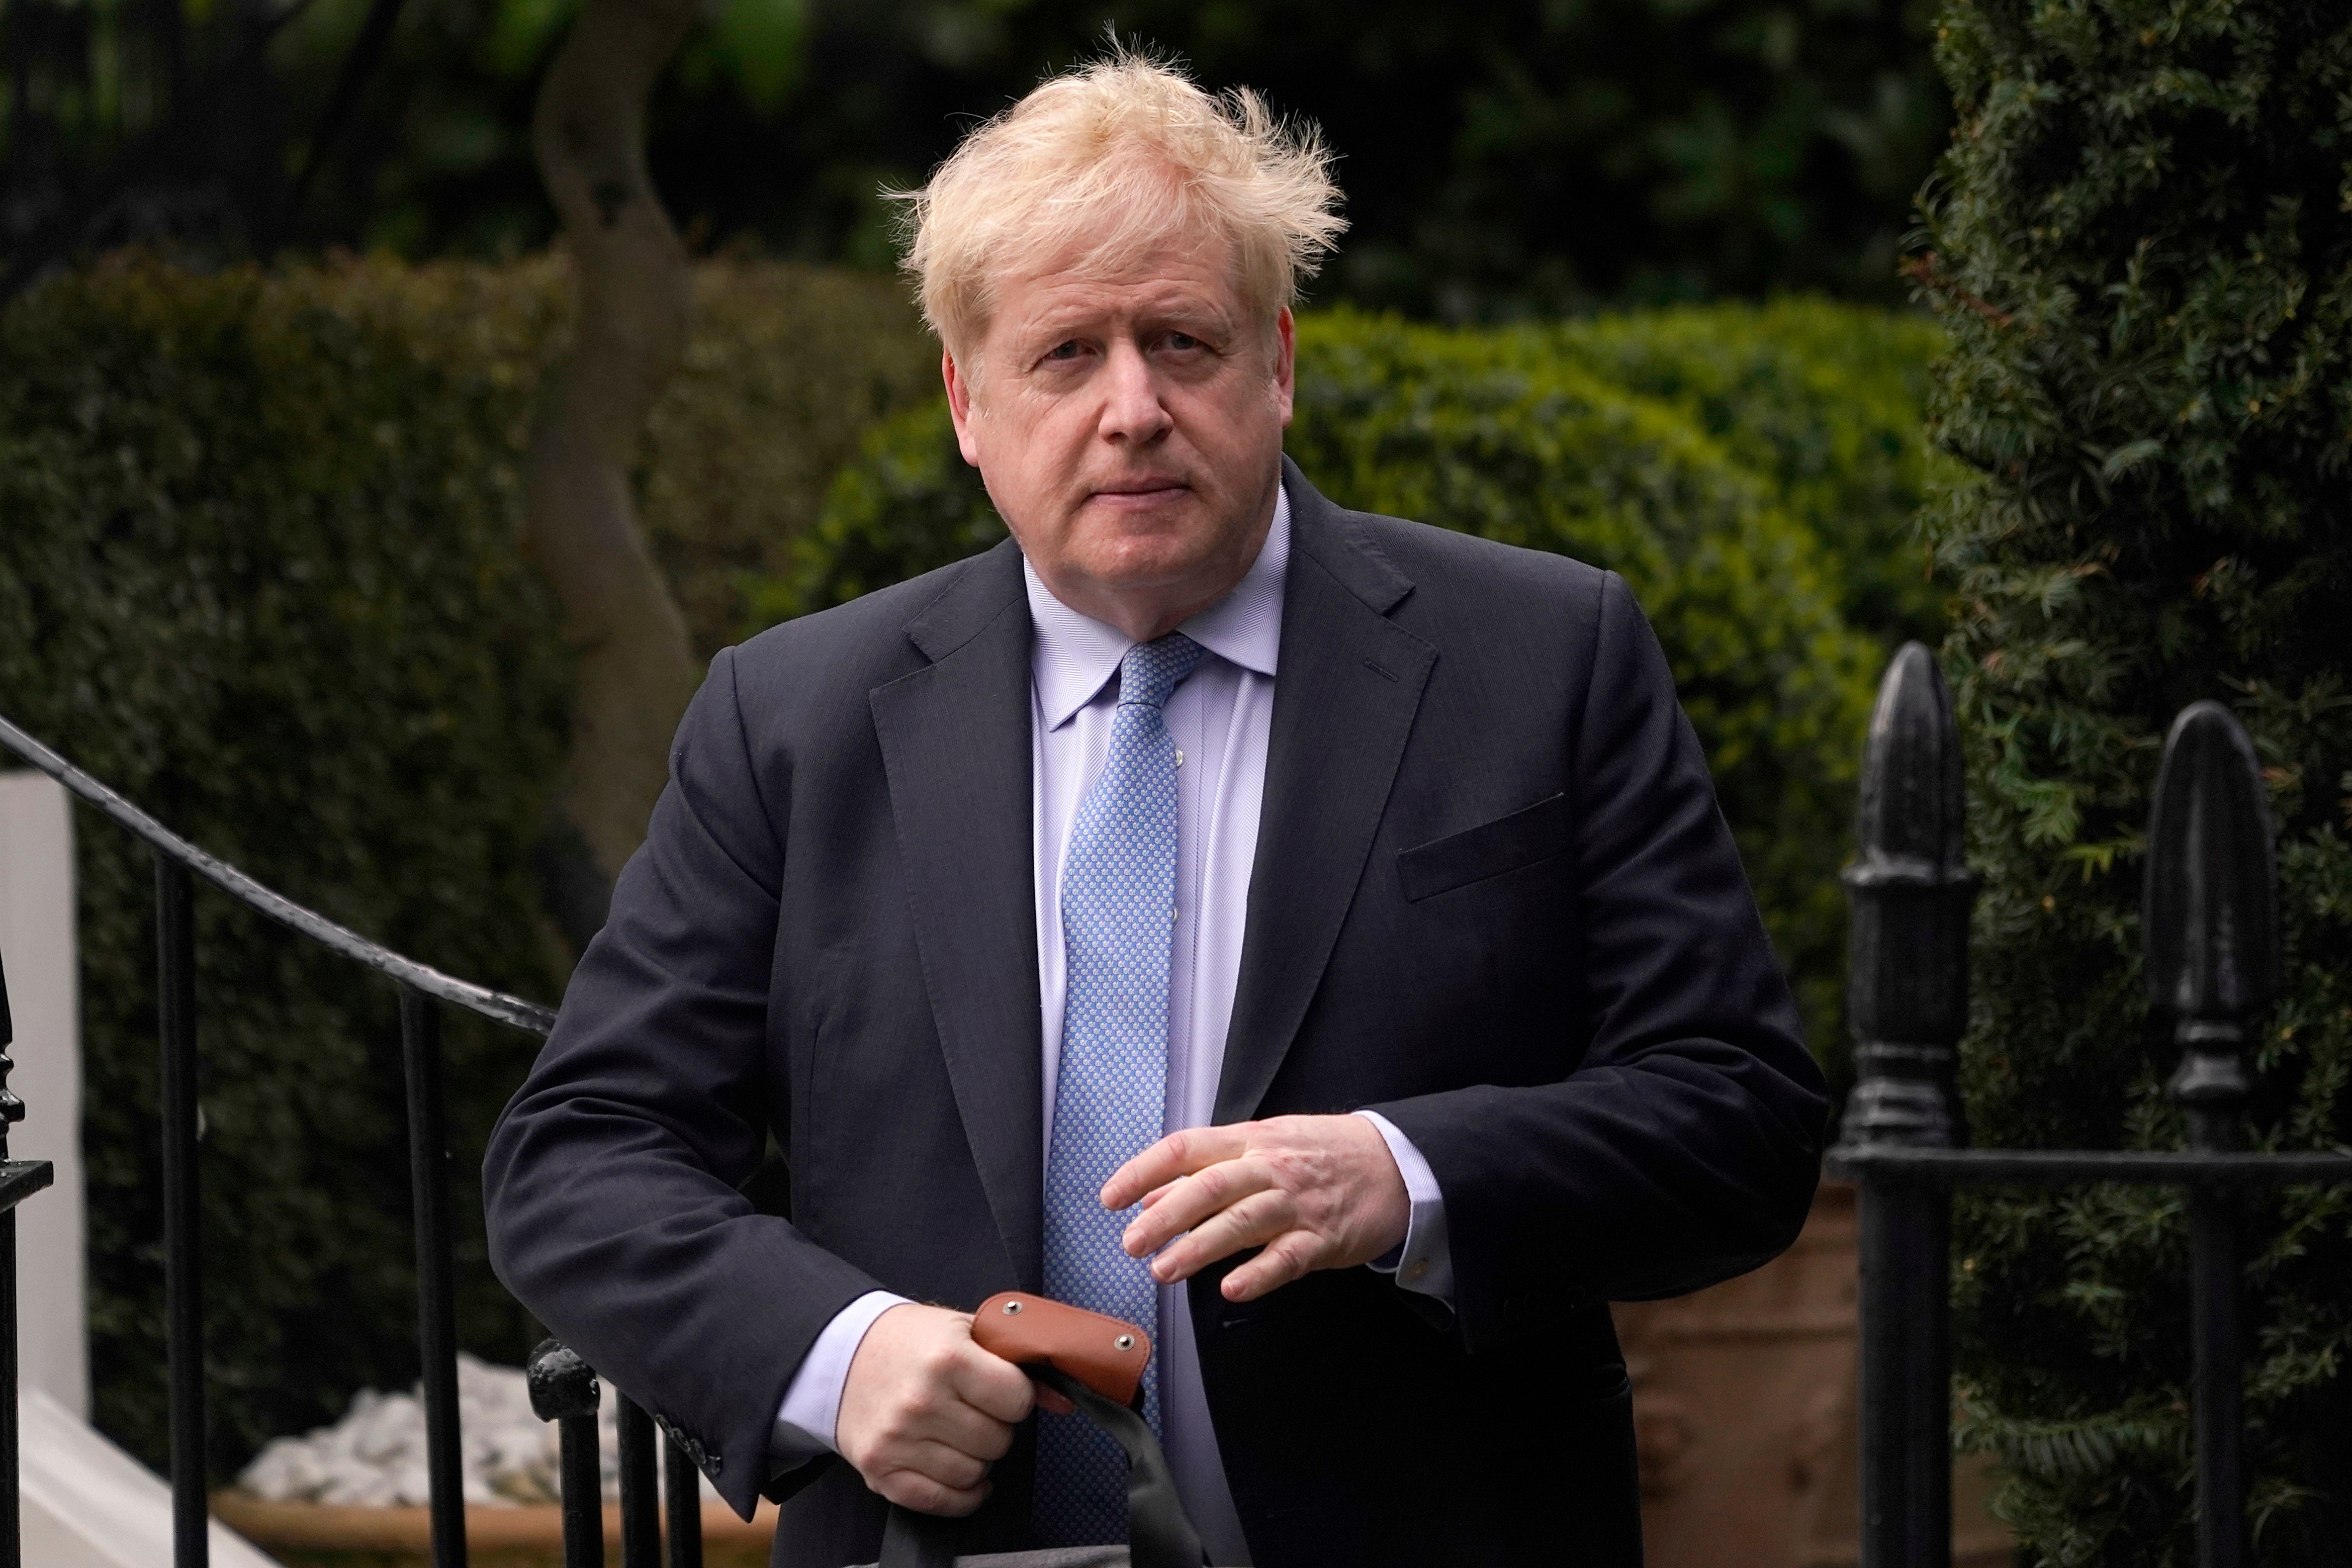 Boris Johnson is under pressure again over Covid claims